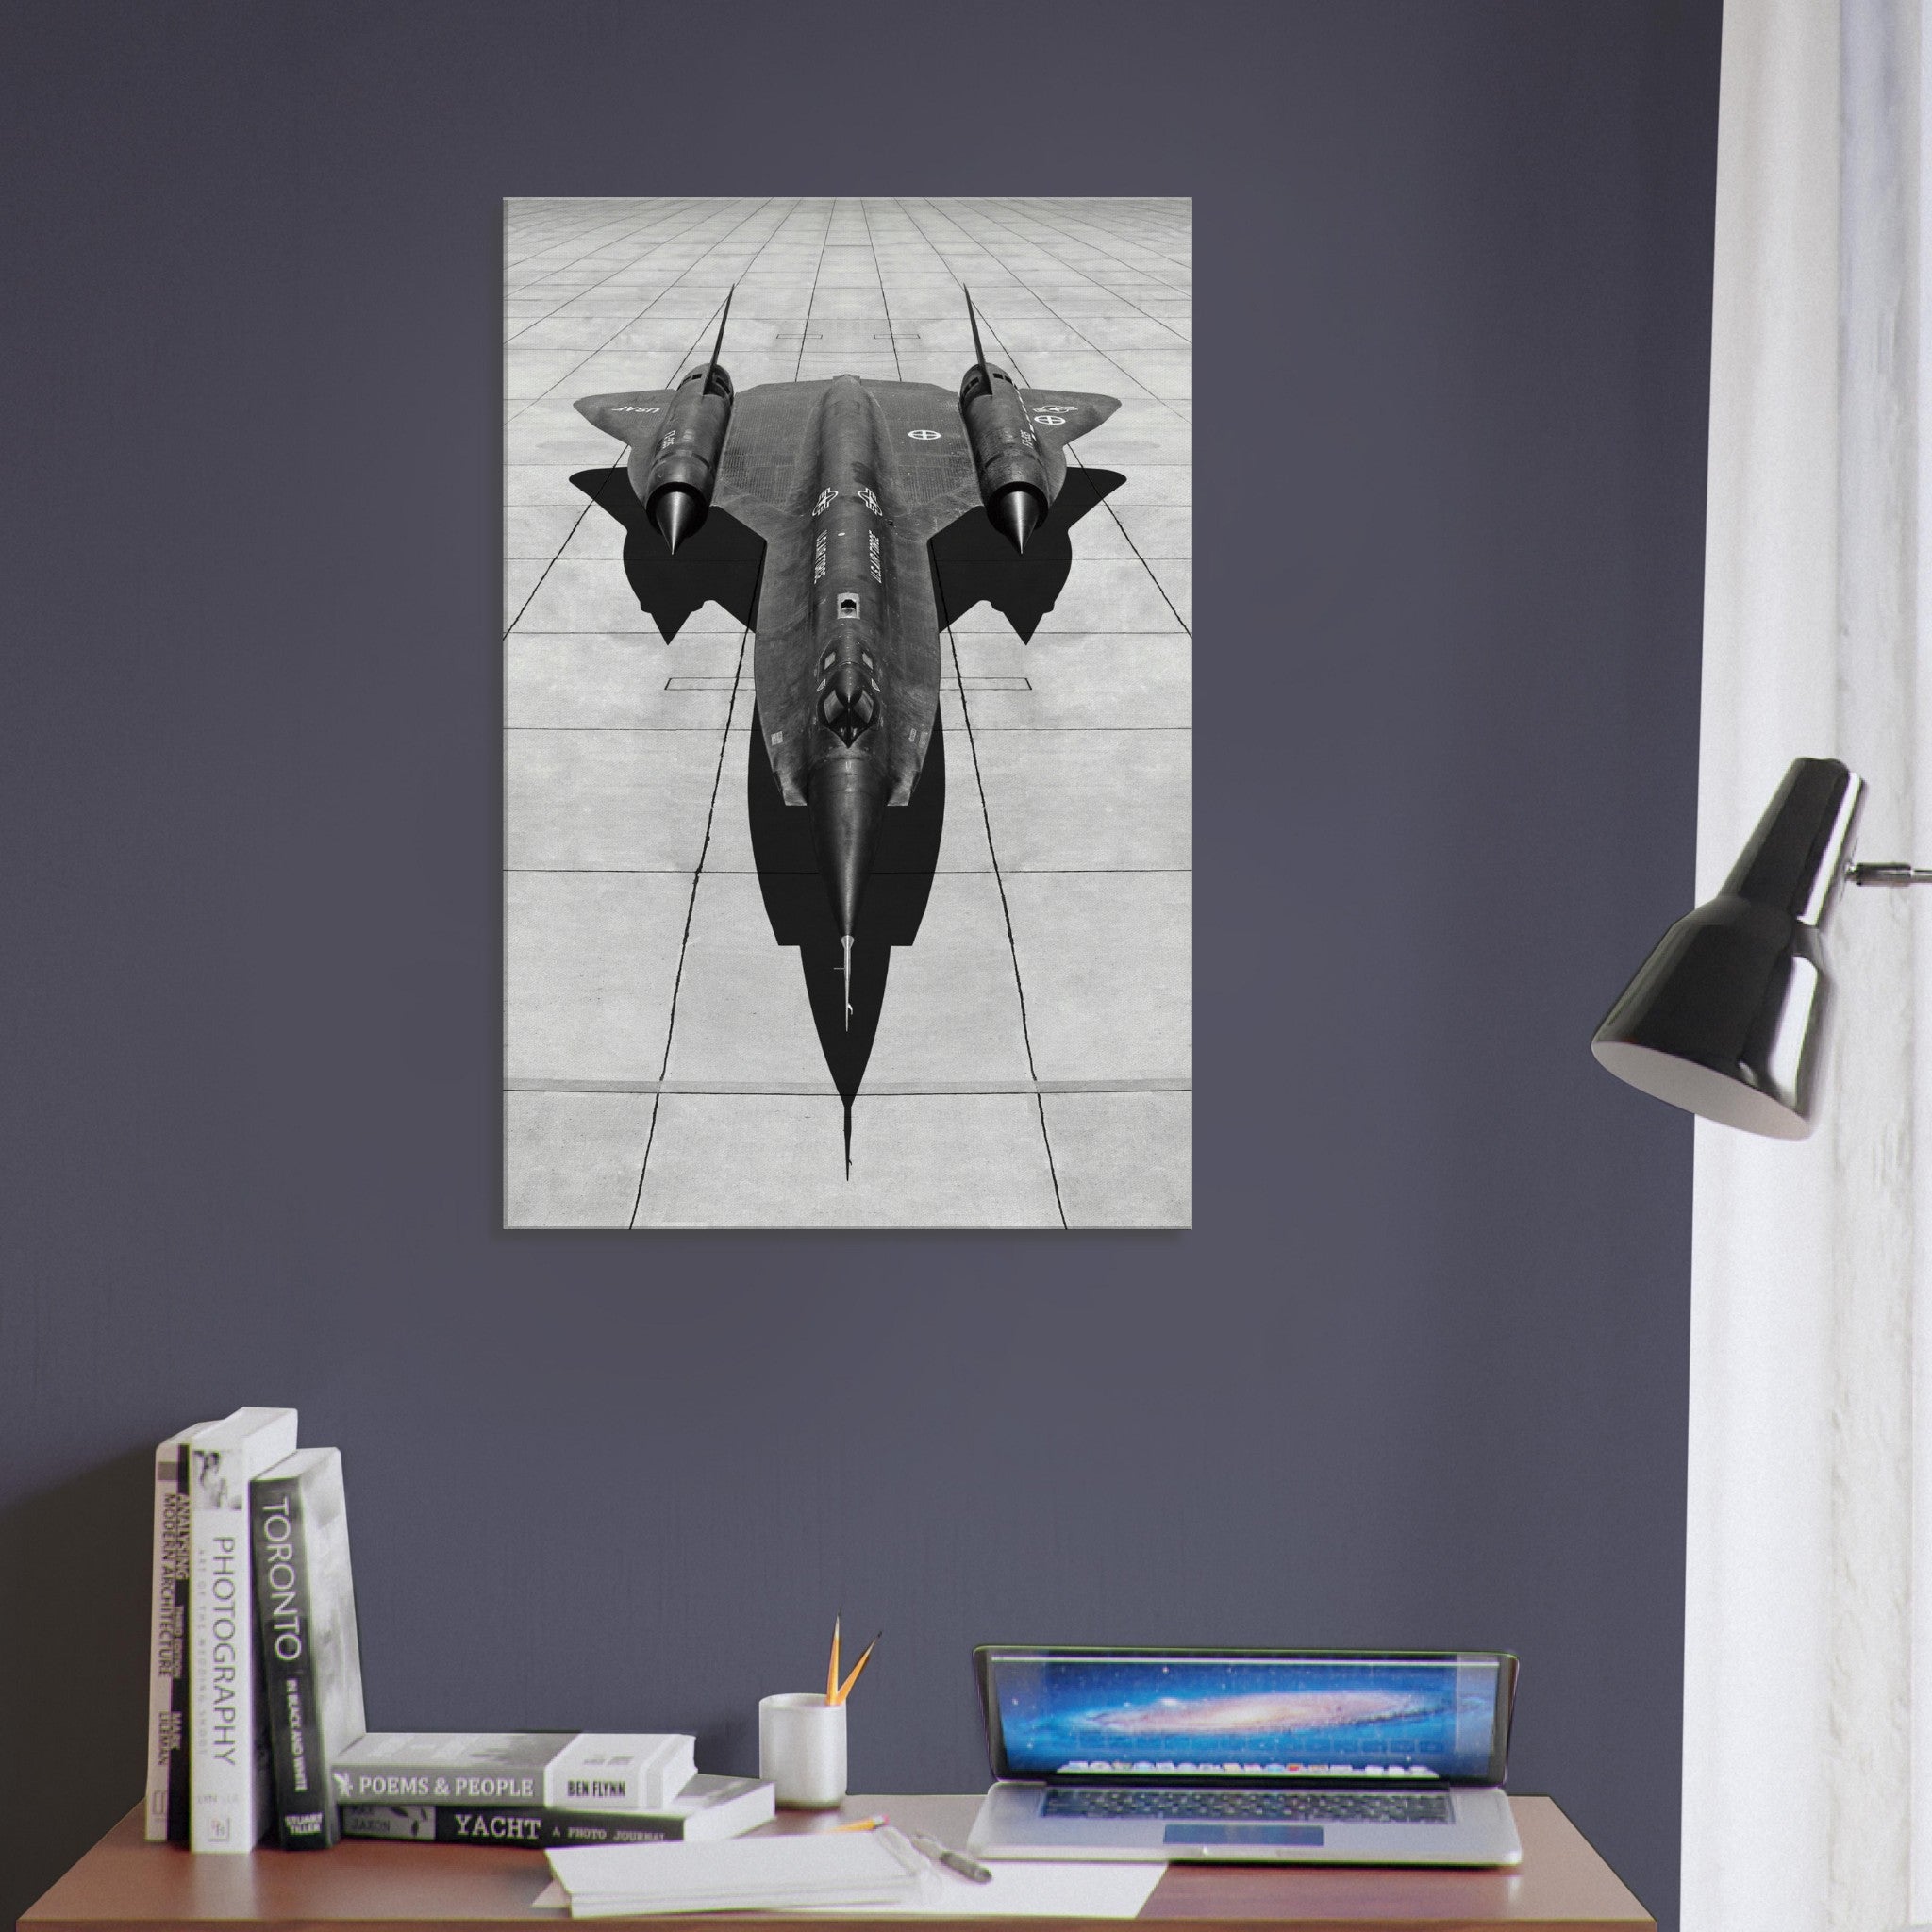 SR-71 "Blackbird" on Canvas - I Love a Hangar